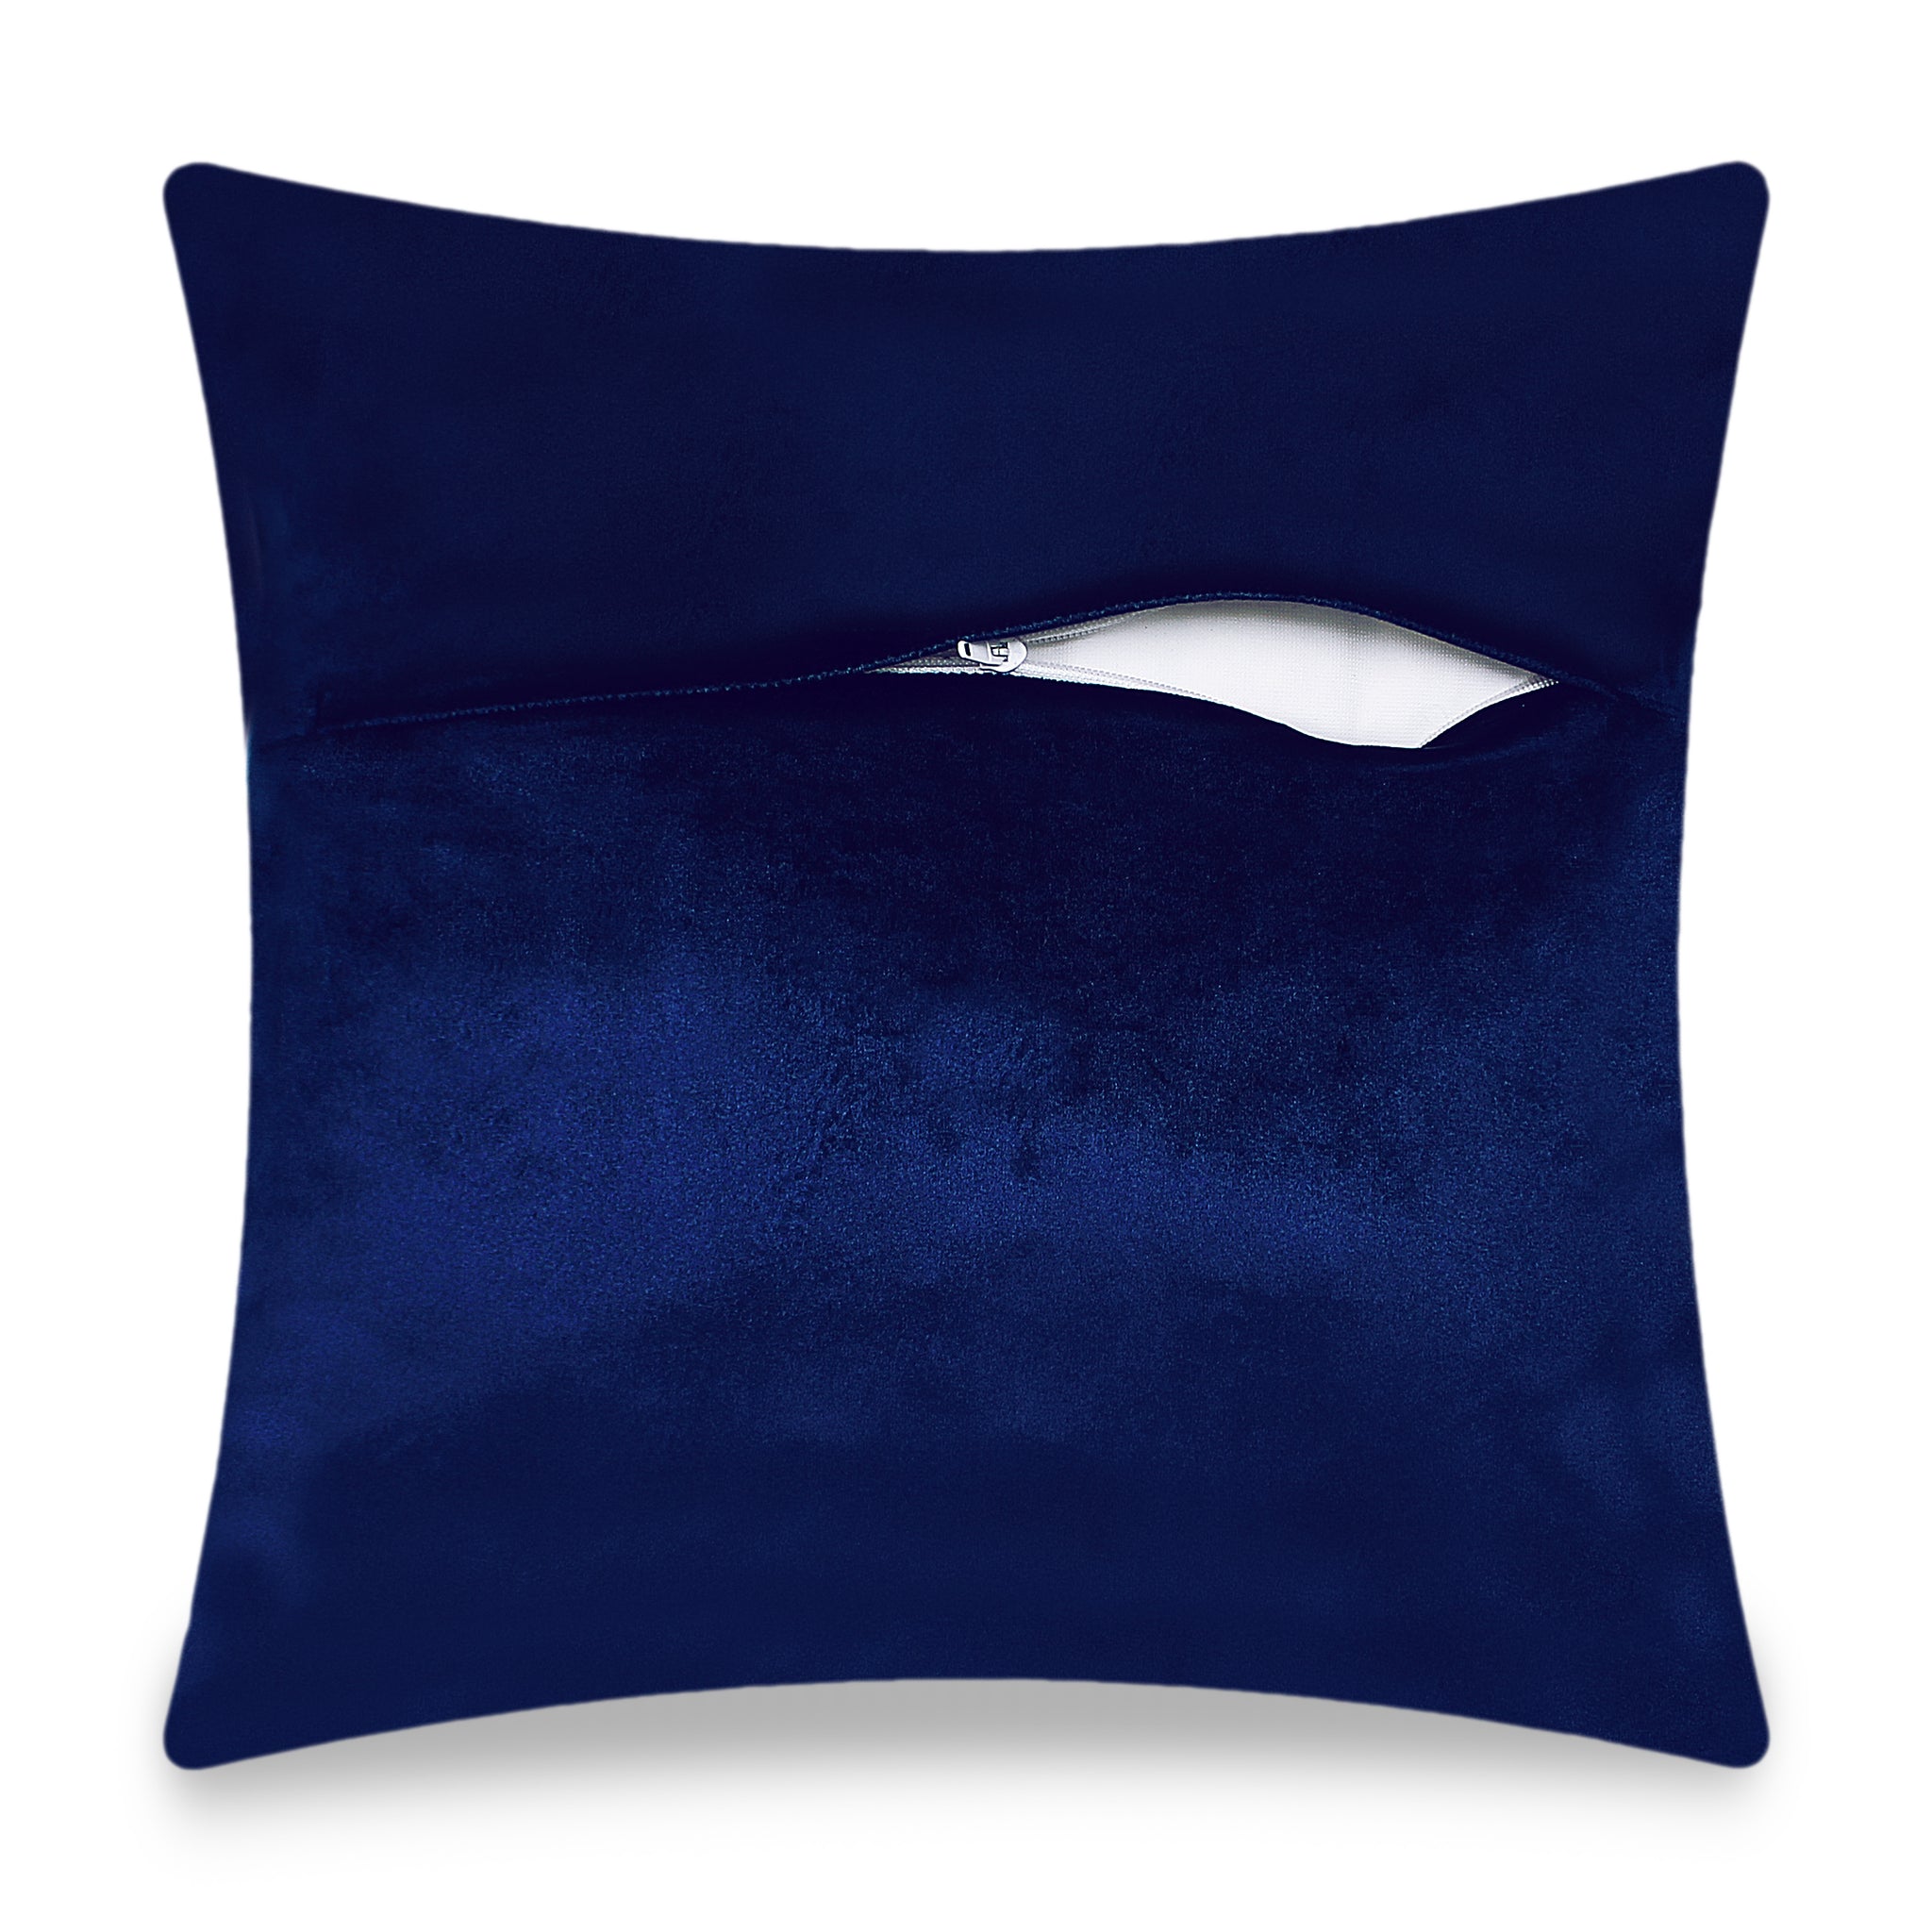  Velvet Cushion Cover Modern Geometric Embroidery Decorative Pillowcase Abstract Home Decor Throw Pillow for Sofa Chair Living Room 45x45 cm 